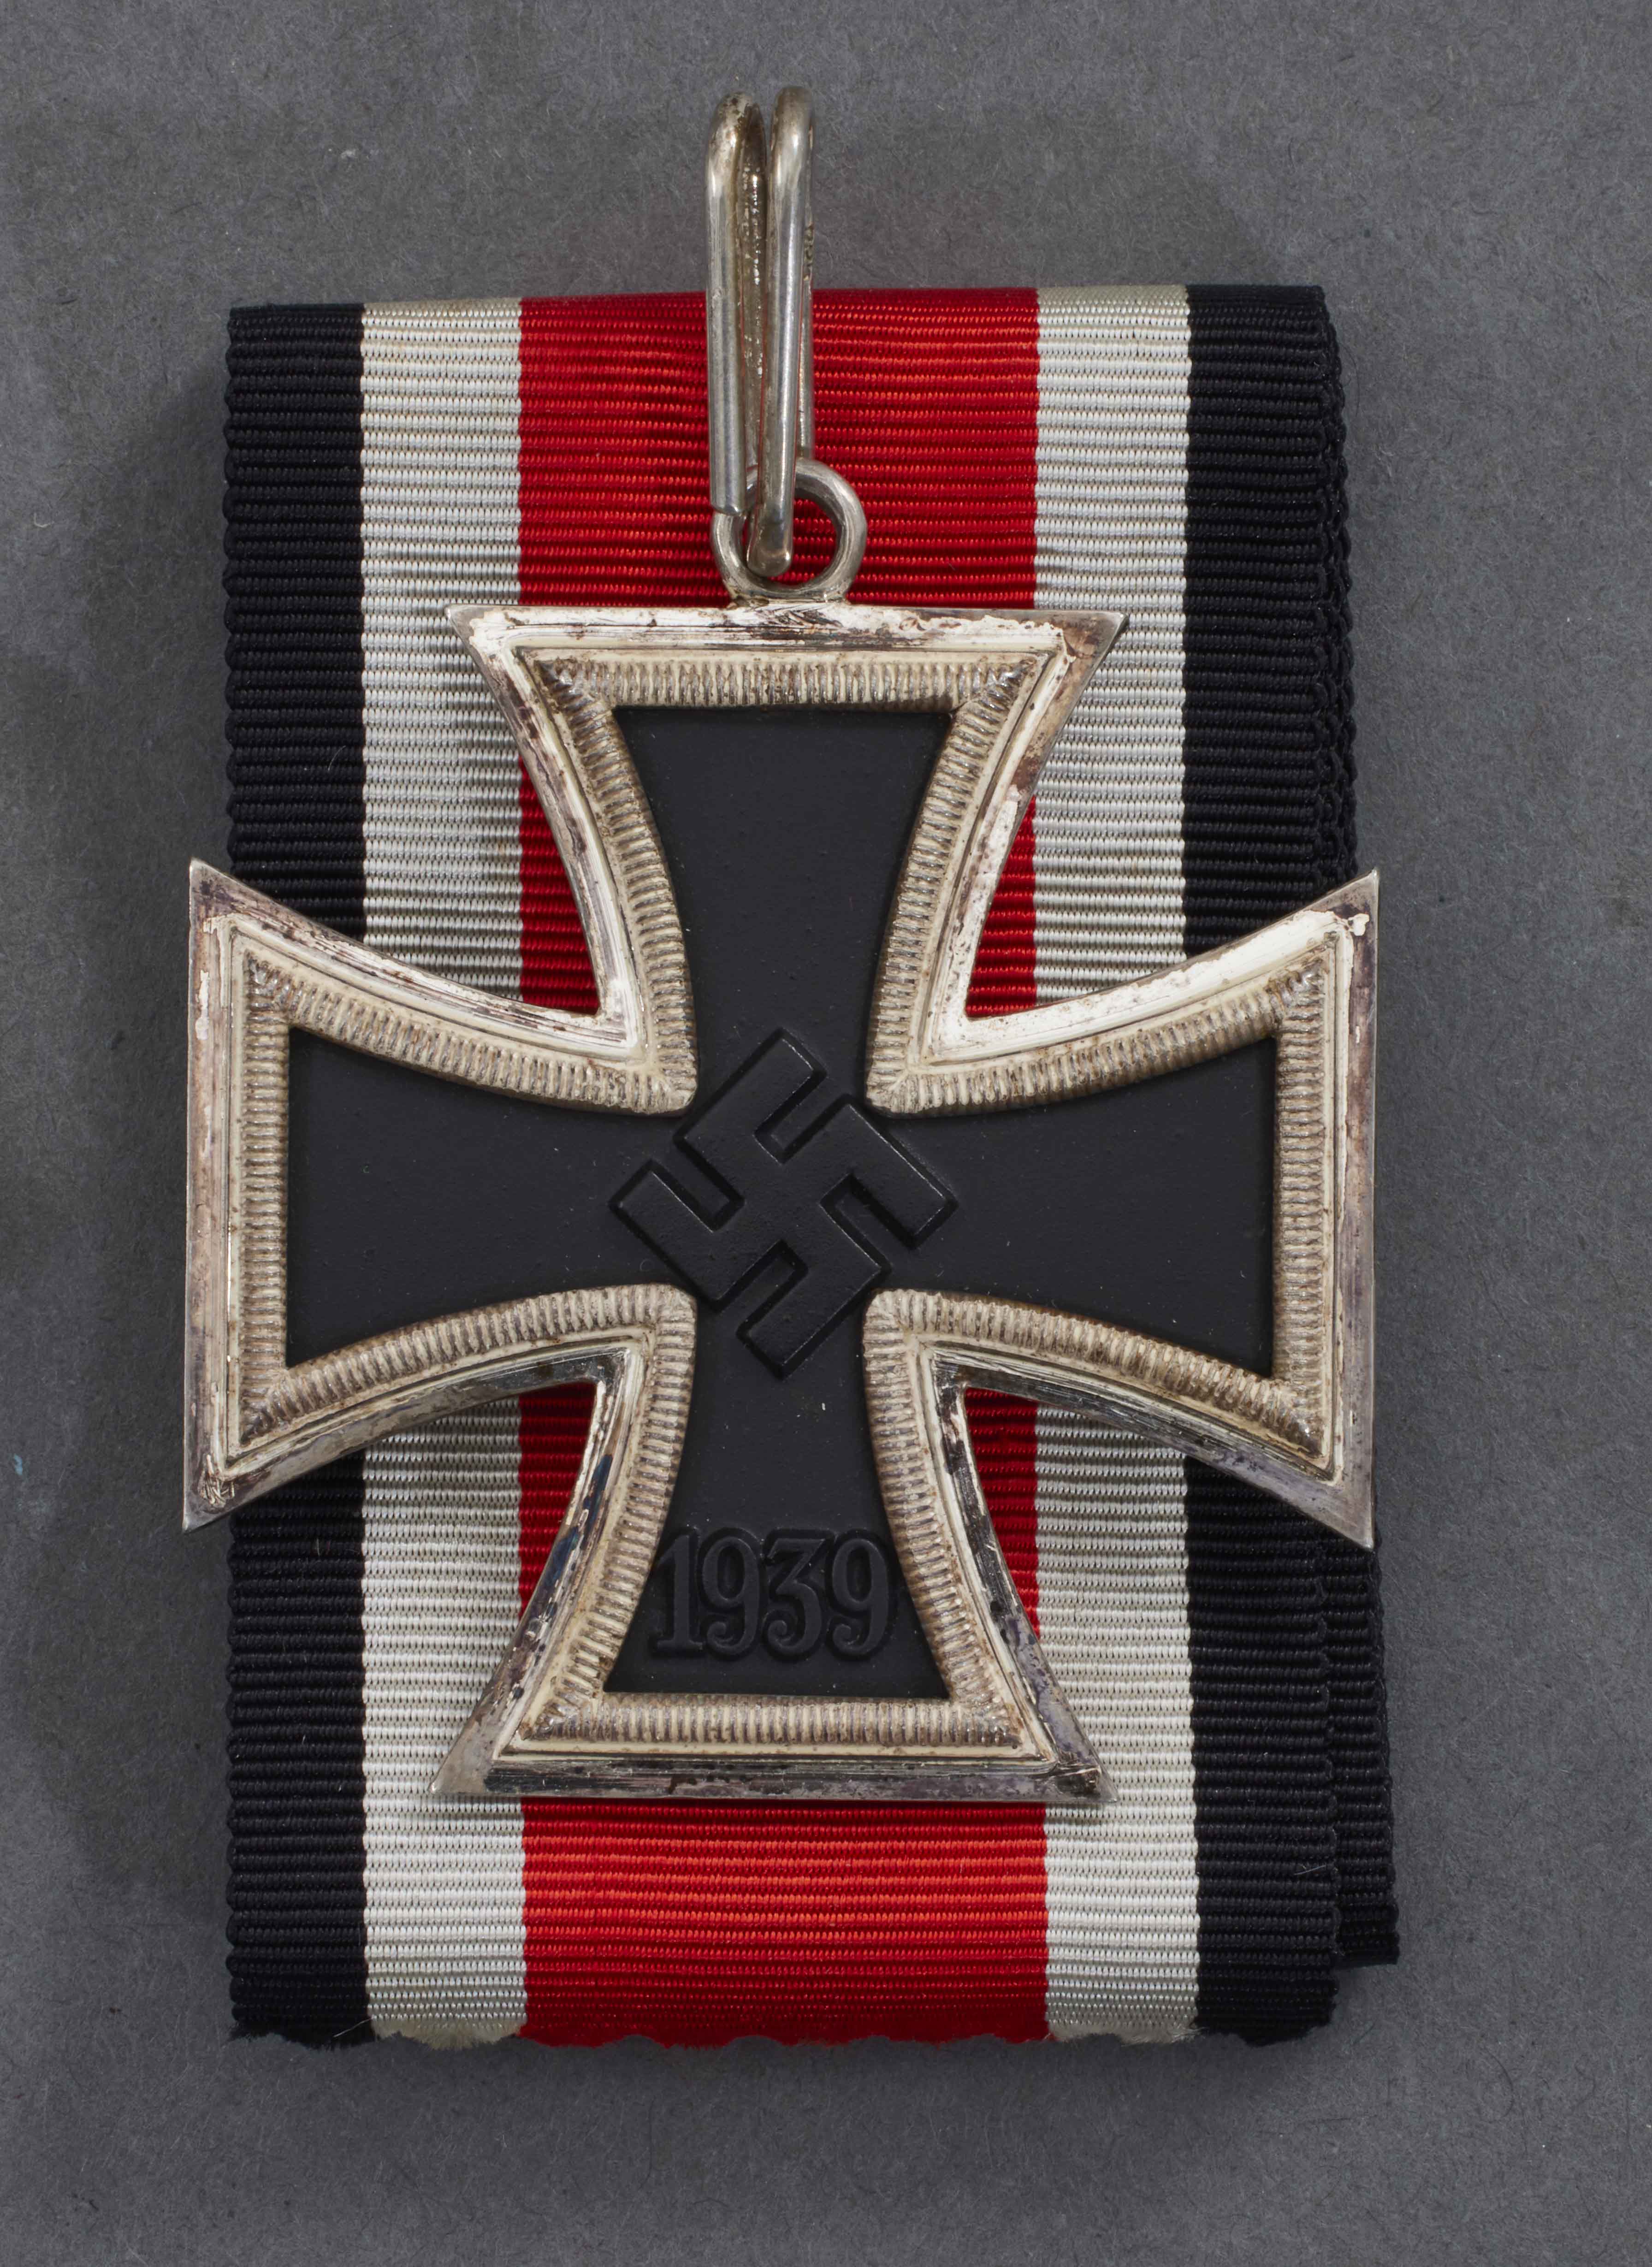 Cased Knights Cross Iron Cross by S&L